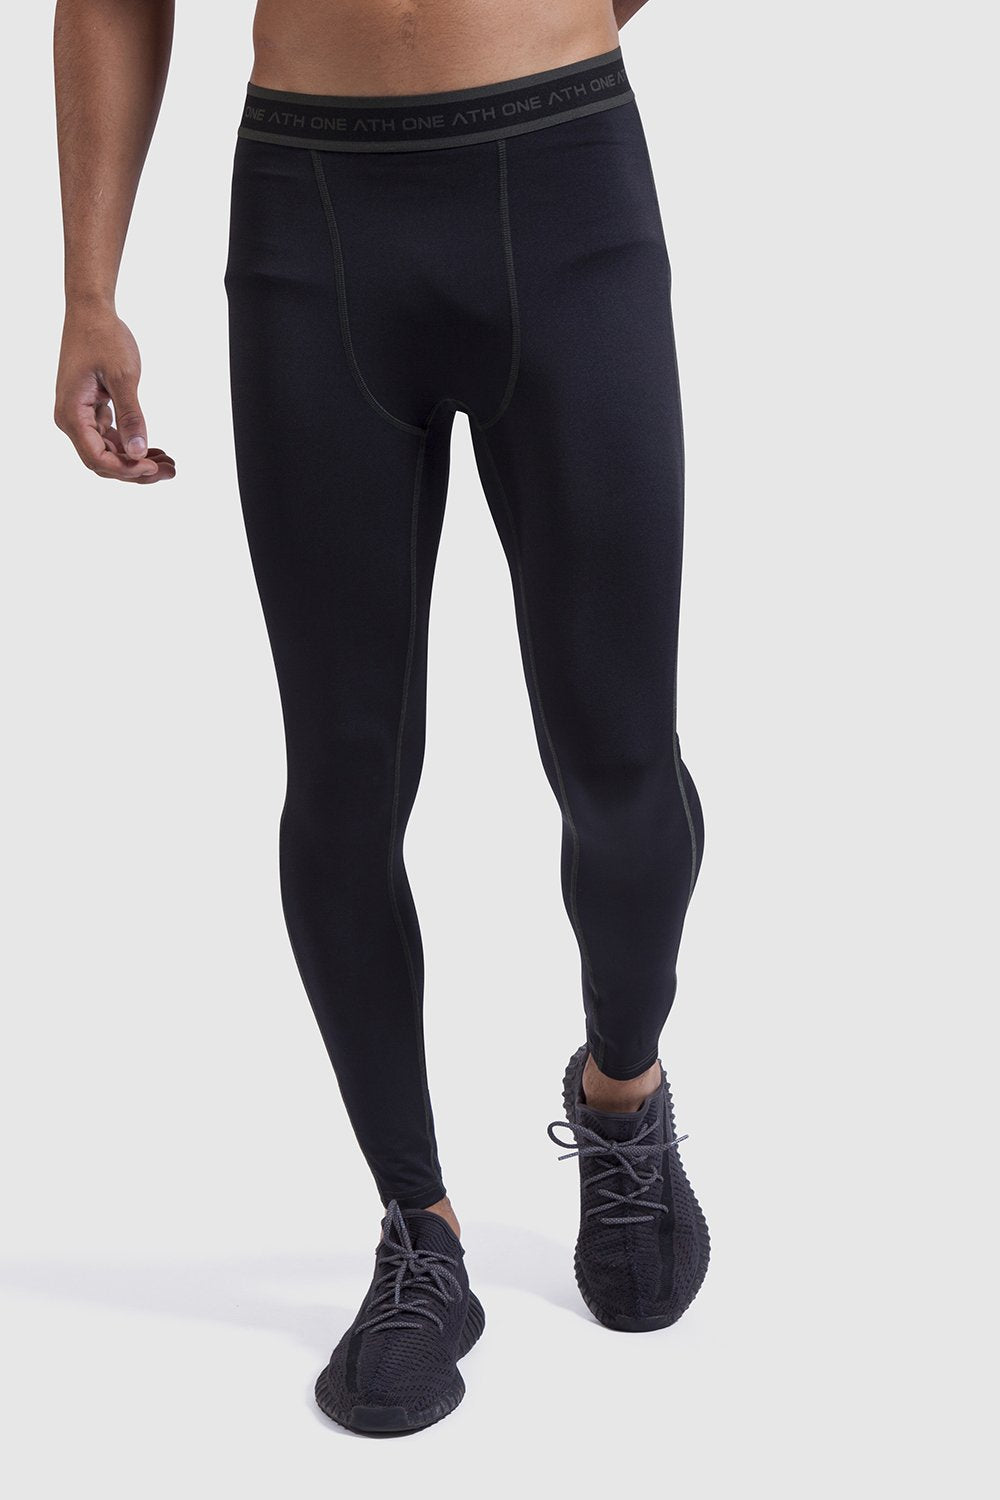 mens black sports leggings